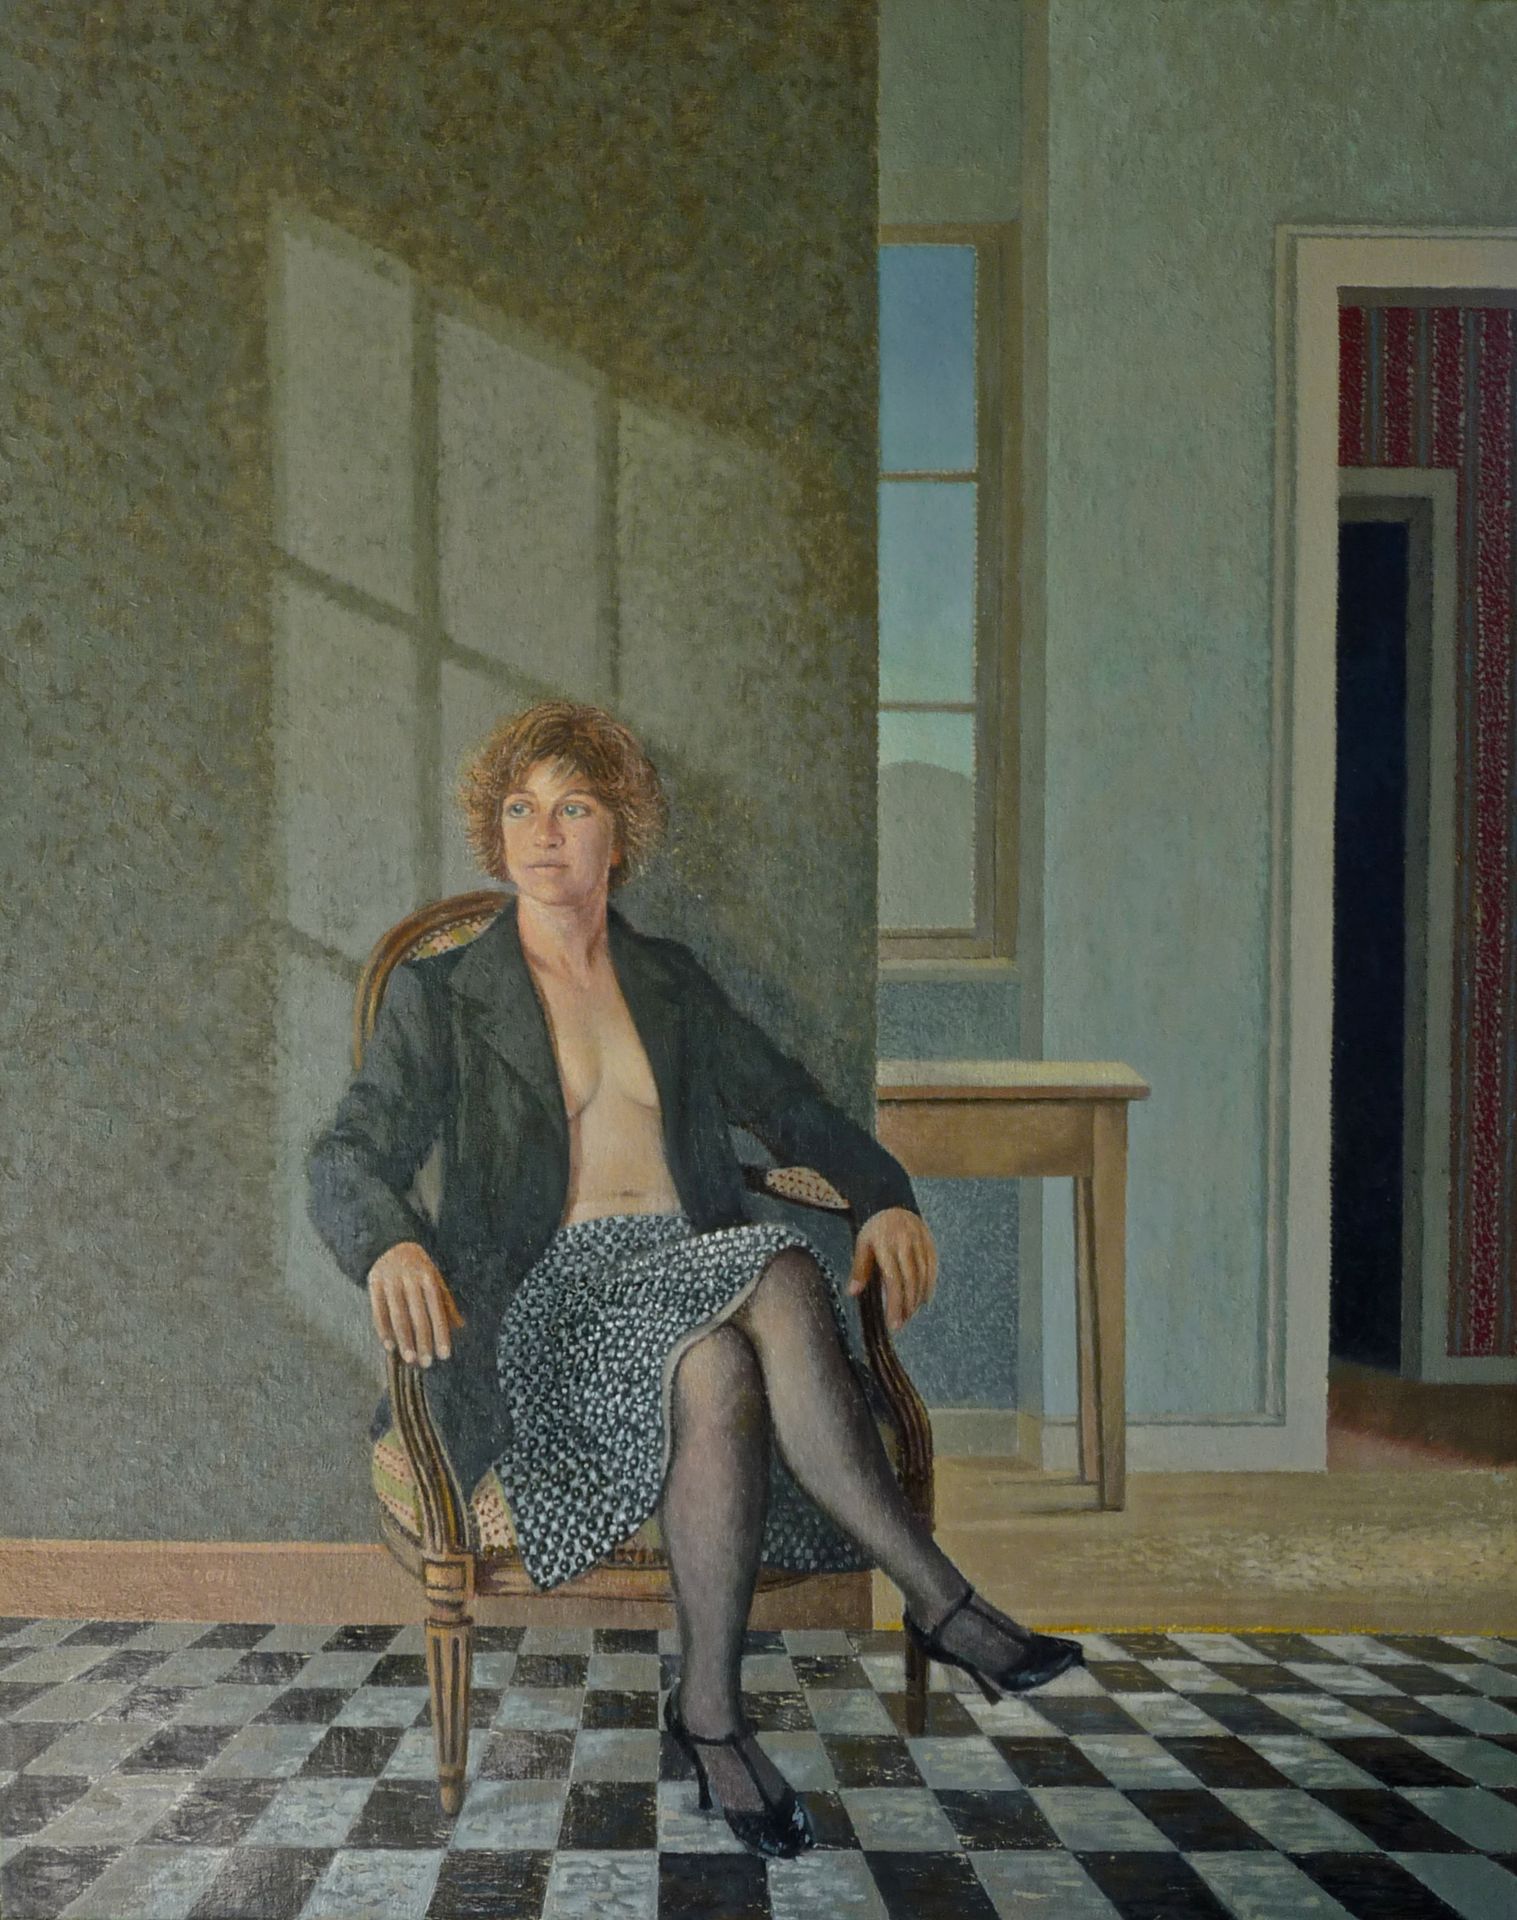 Null 让-克劳德-贝松-吉拉尔 (1938-2021)

Edith V., 2014

布面油画，左下方有签名和日期

81 x 65 cm